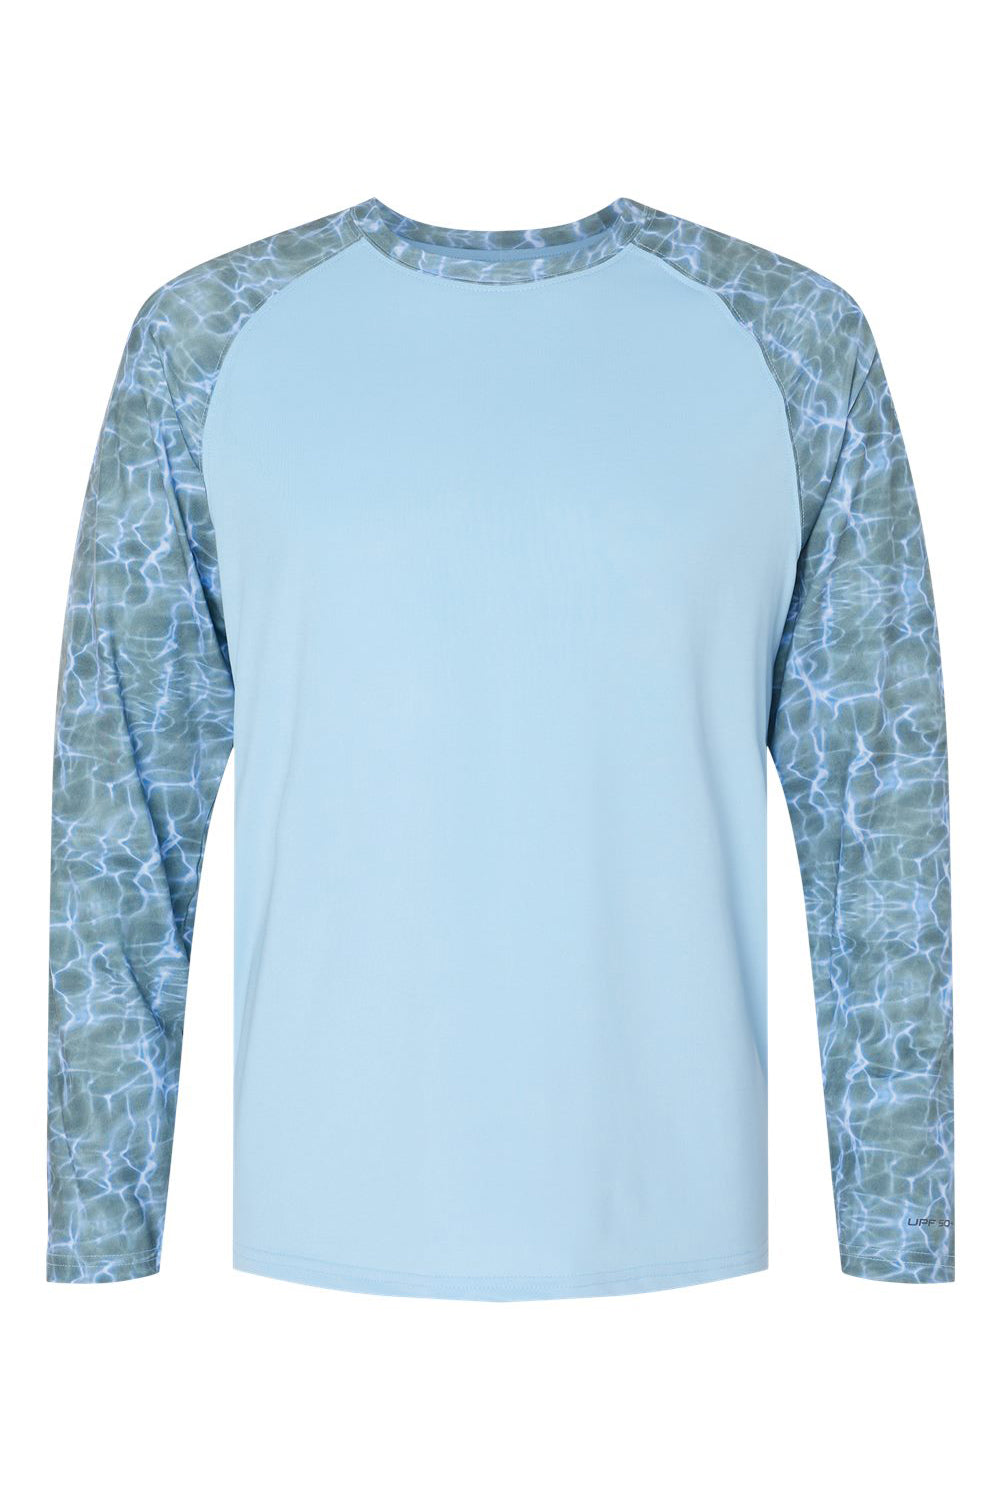 Paragon 231 Mens Panama Colorblocked Long Sleeve Crewneck T-Shirt Grey Mist Water Flat Front